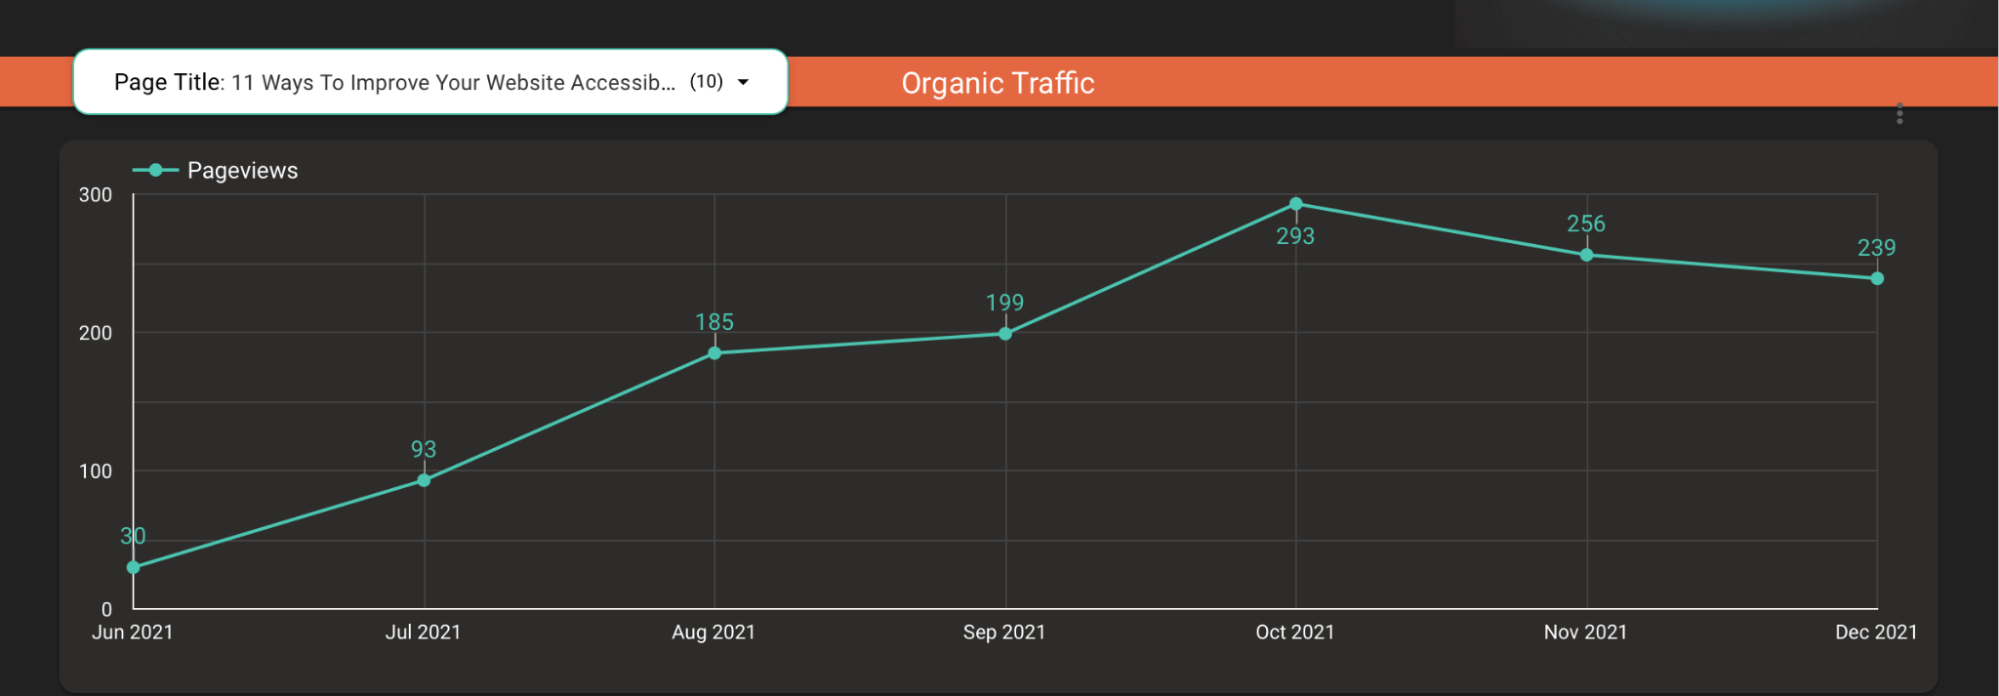 Organic traffic graph. 